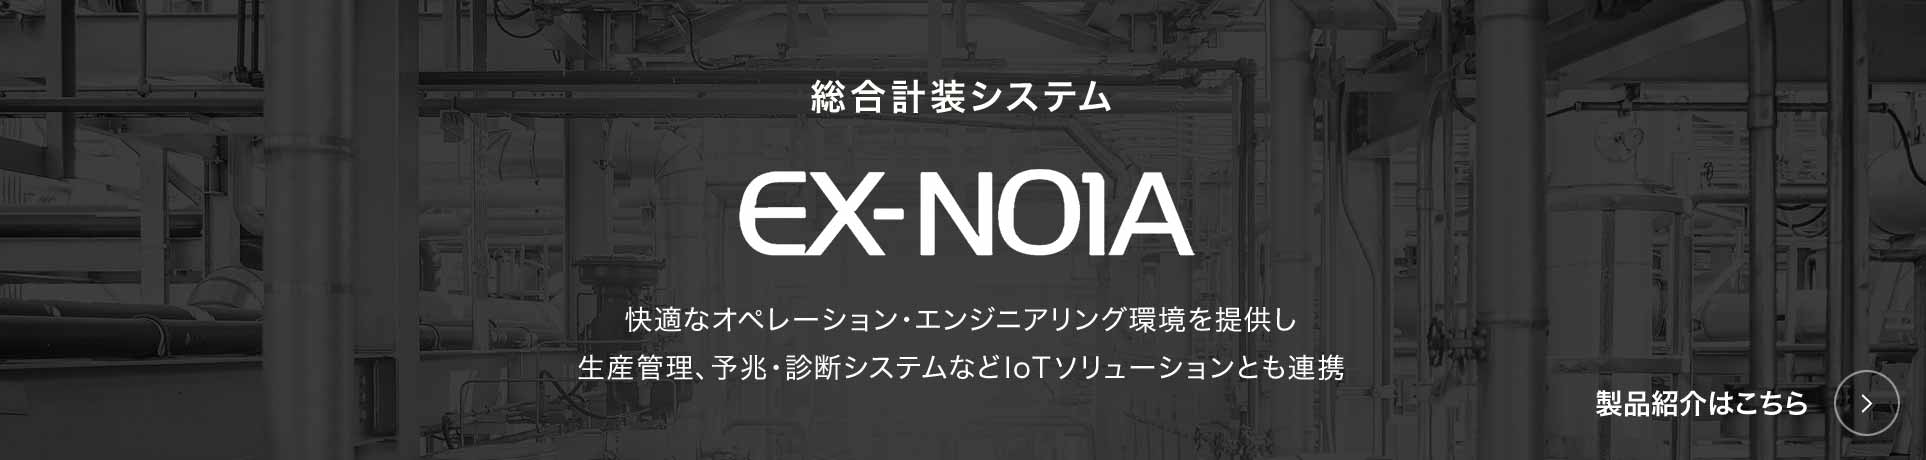 EX-N01A 製品紹介